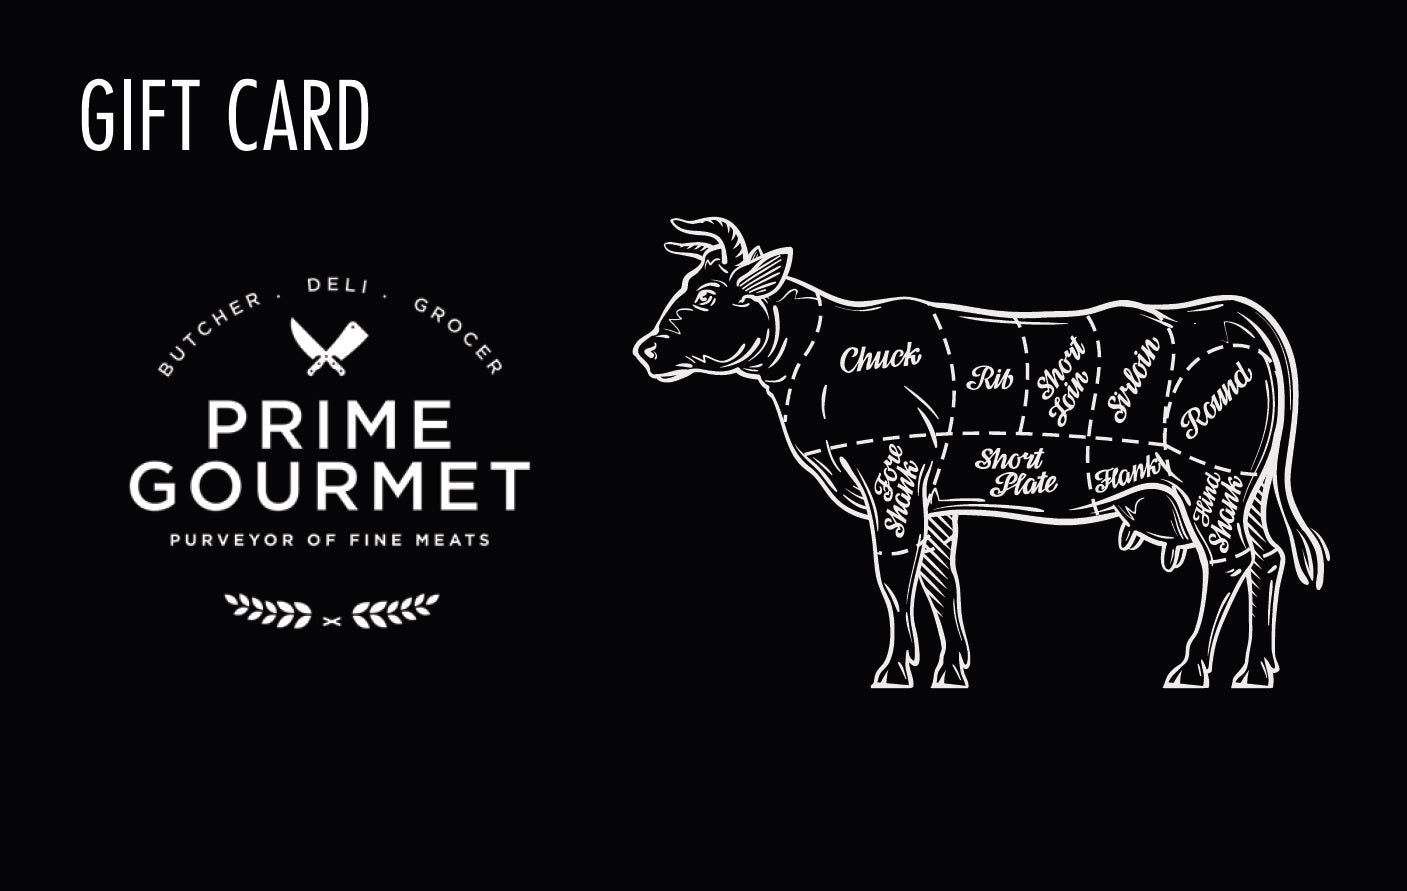 Prime Gourmet Gift Card - Prime Gourmet Online